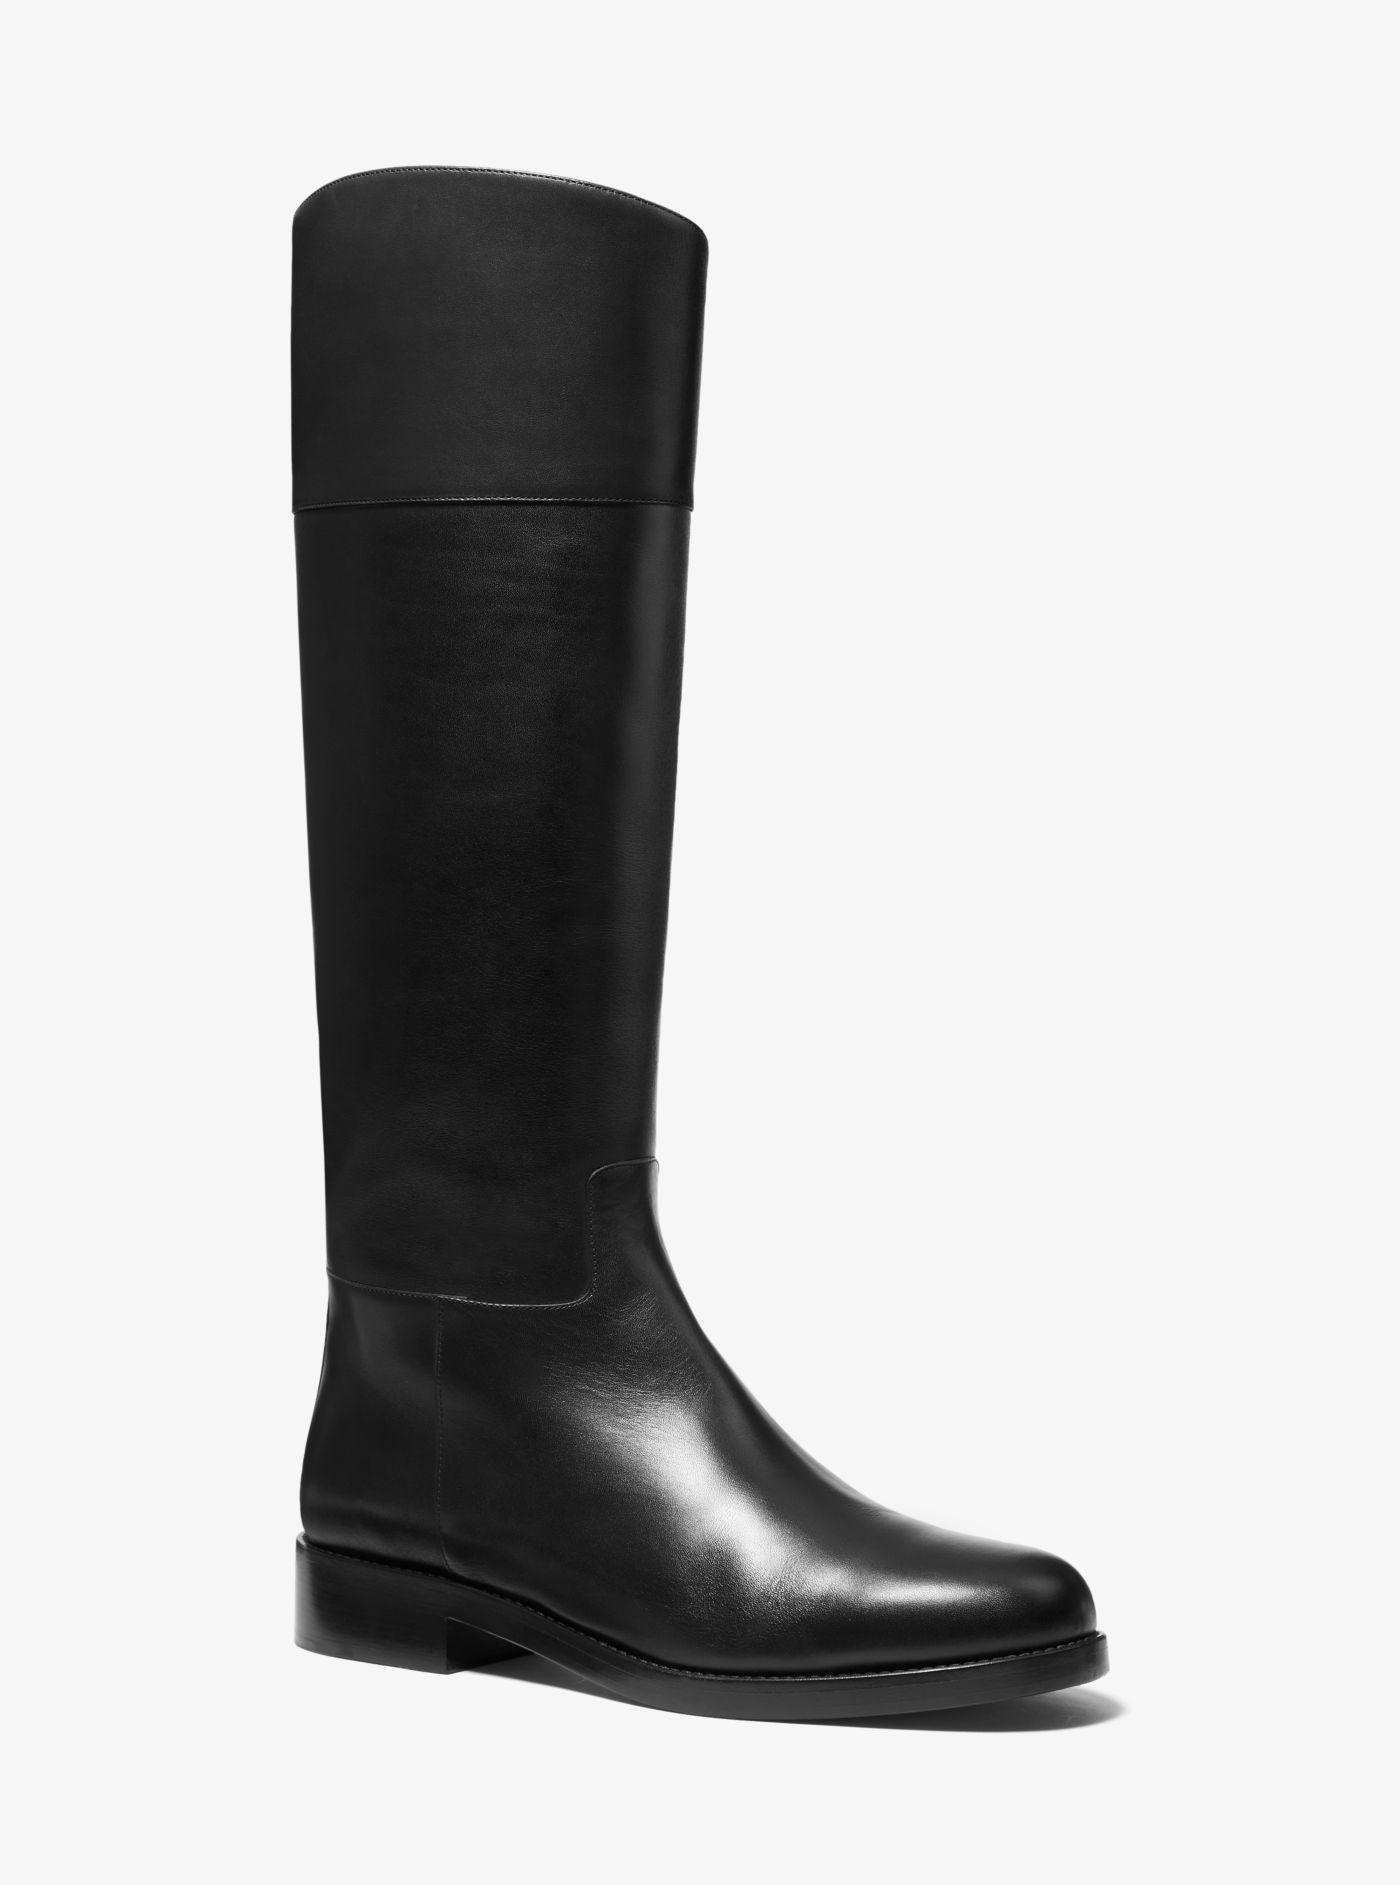 Michael Kors Braden Leather Riding Boot in Black | Lyst